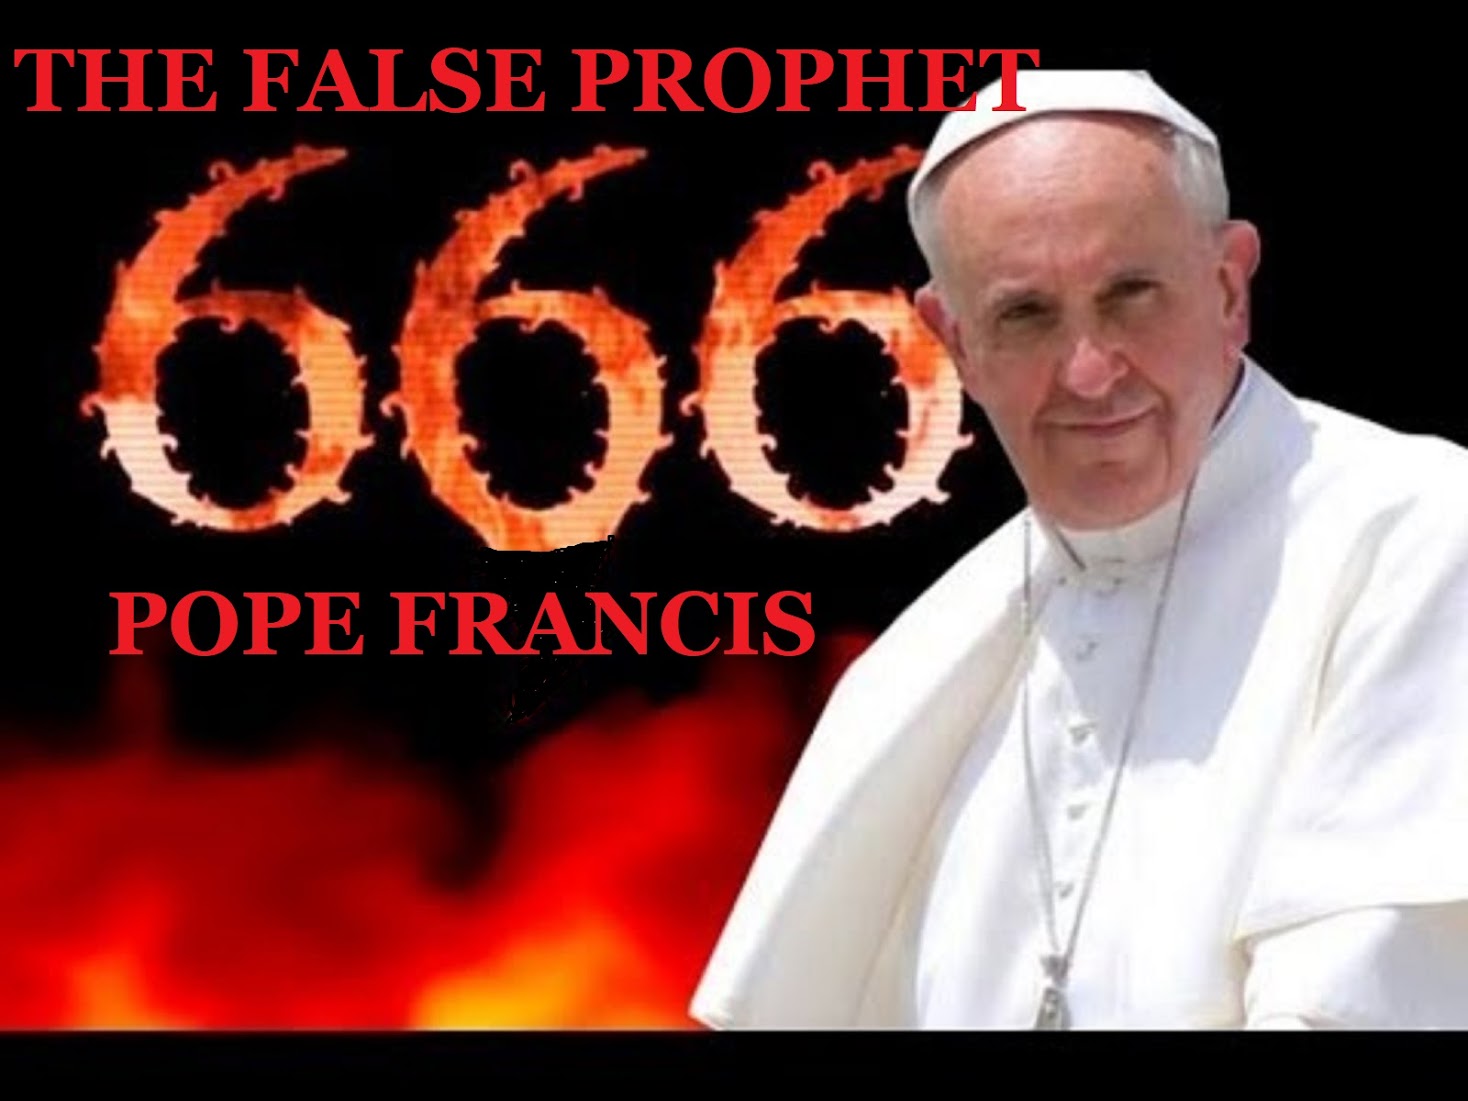 THE FALSE PROPHET 666 POPE FRANCIS